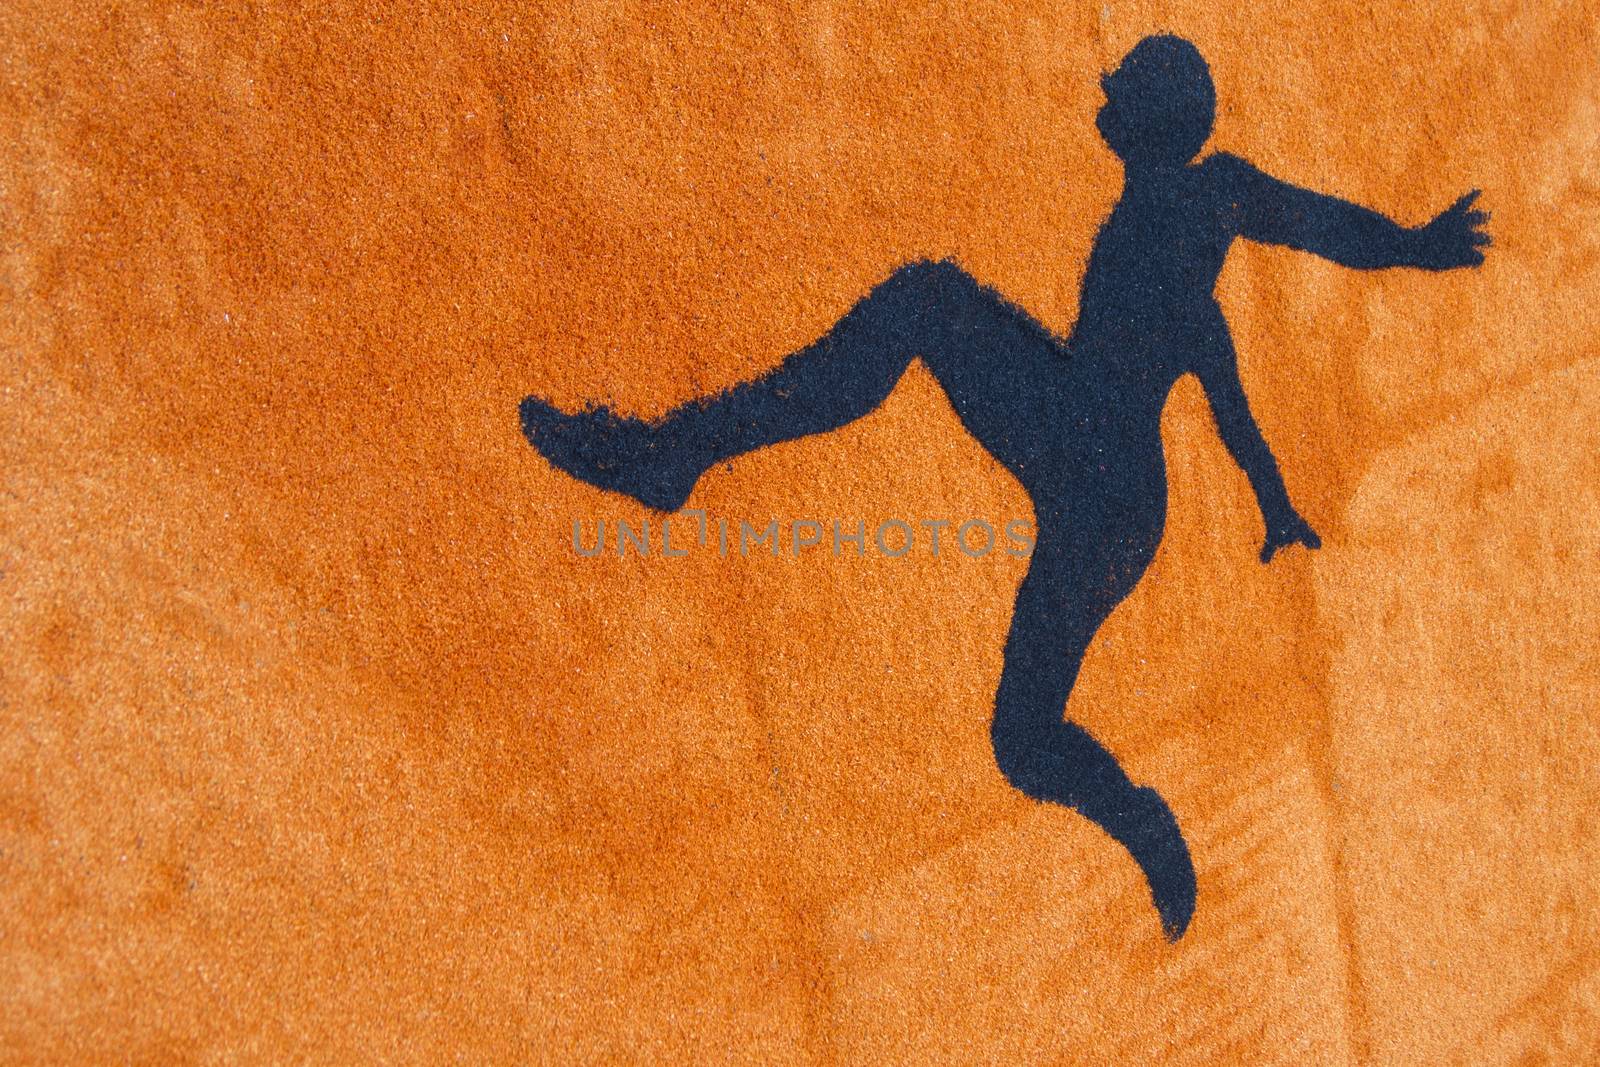 A man jumping by fotografiche.eu